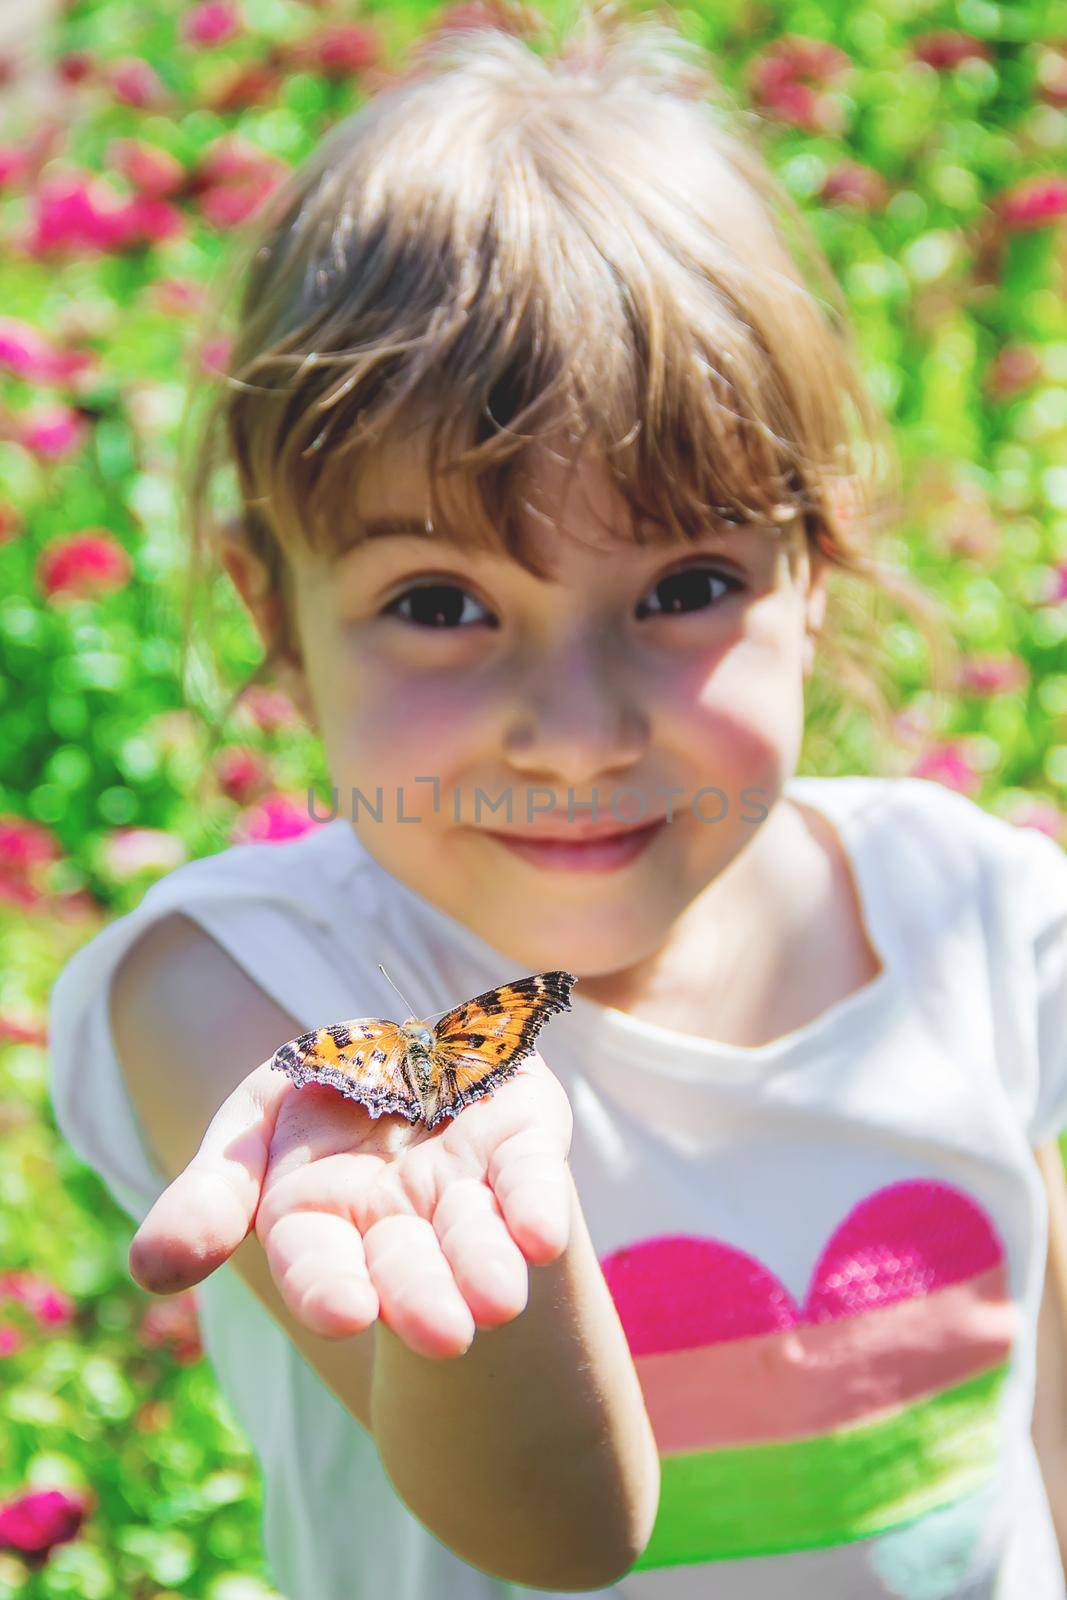 Child with a butterfly. Idea leuconoe. Selective focus.